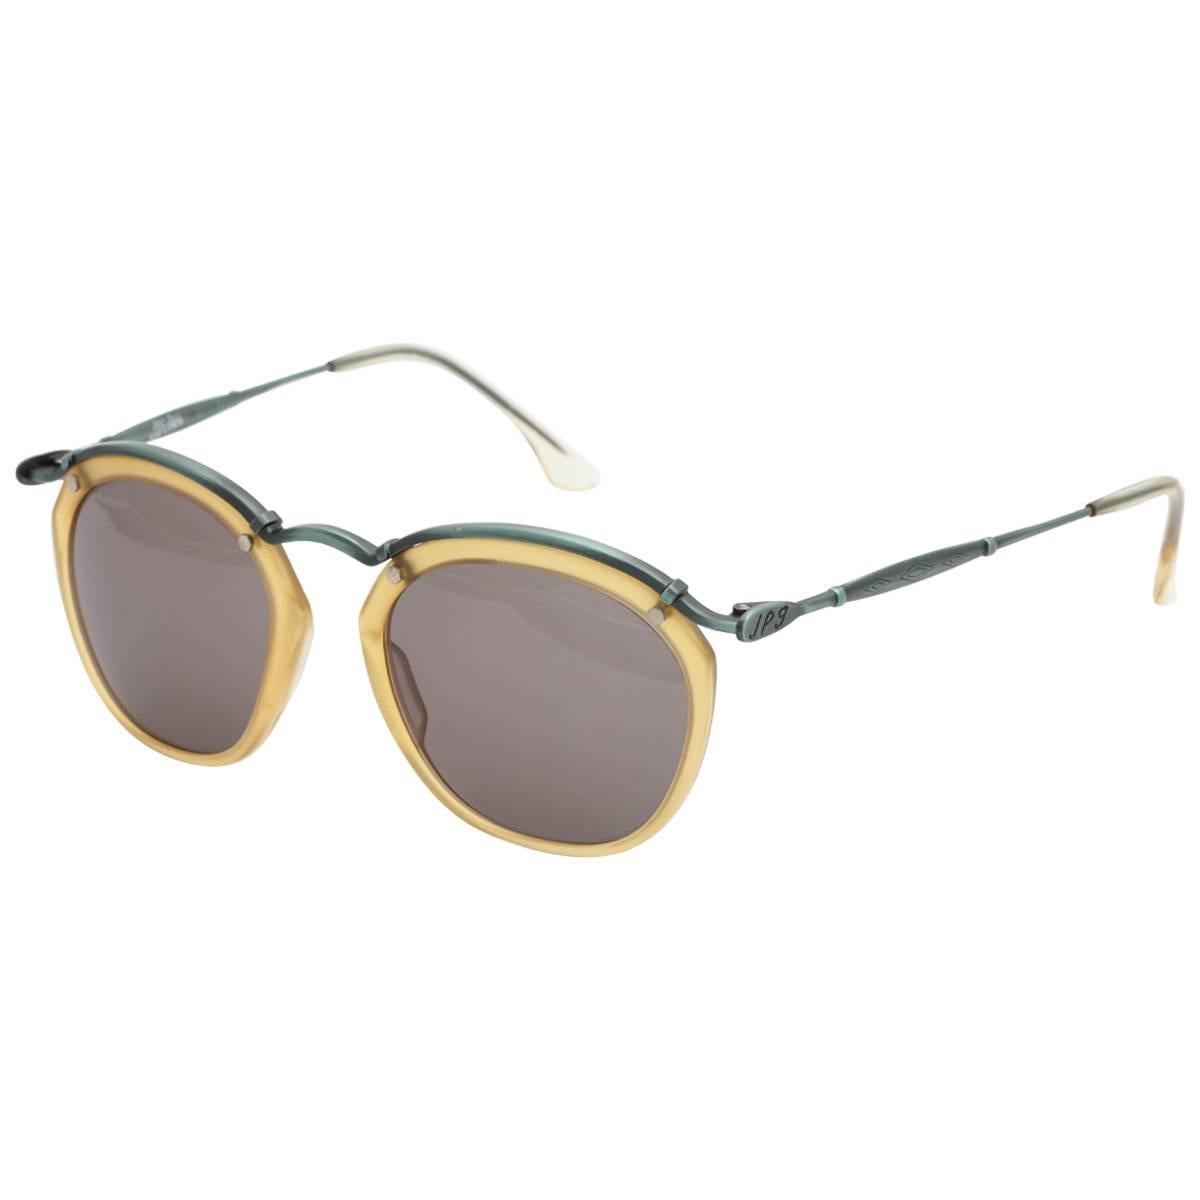 Jean Paul Gaultier Vintage Sunglasses 56-1273 For Sale